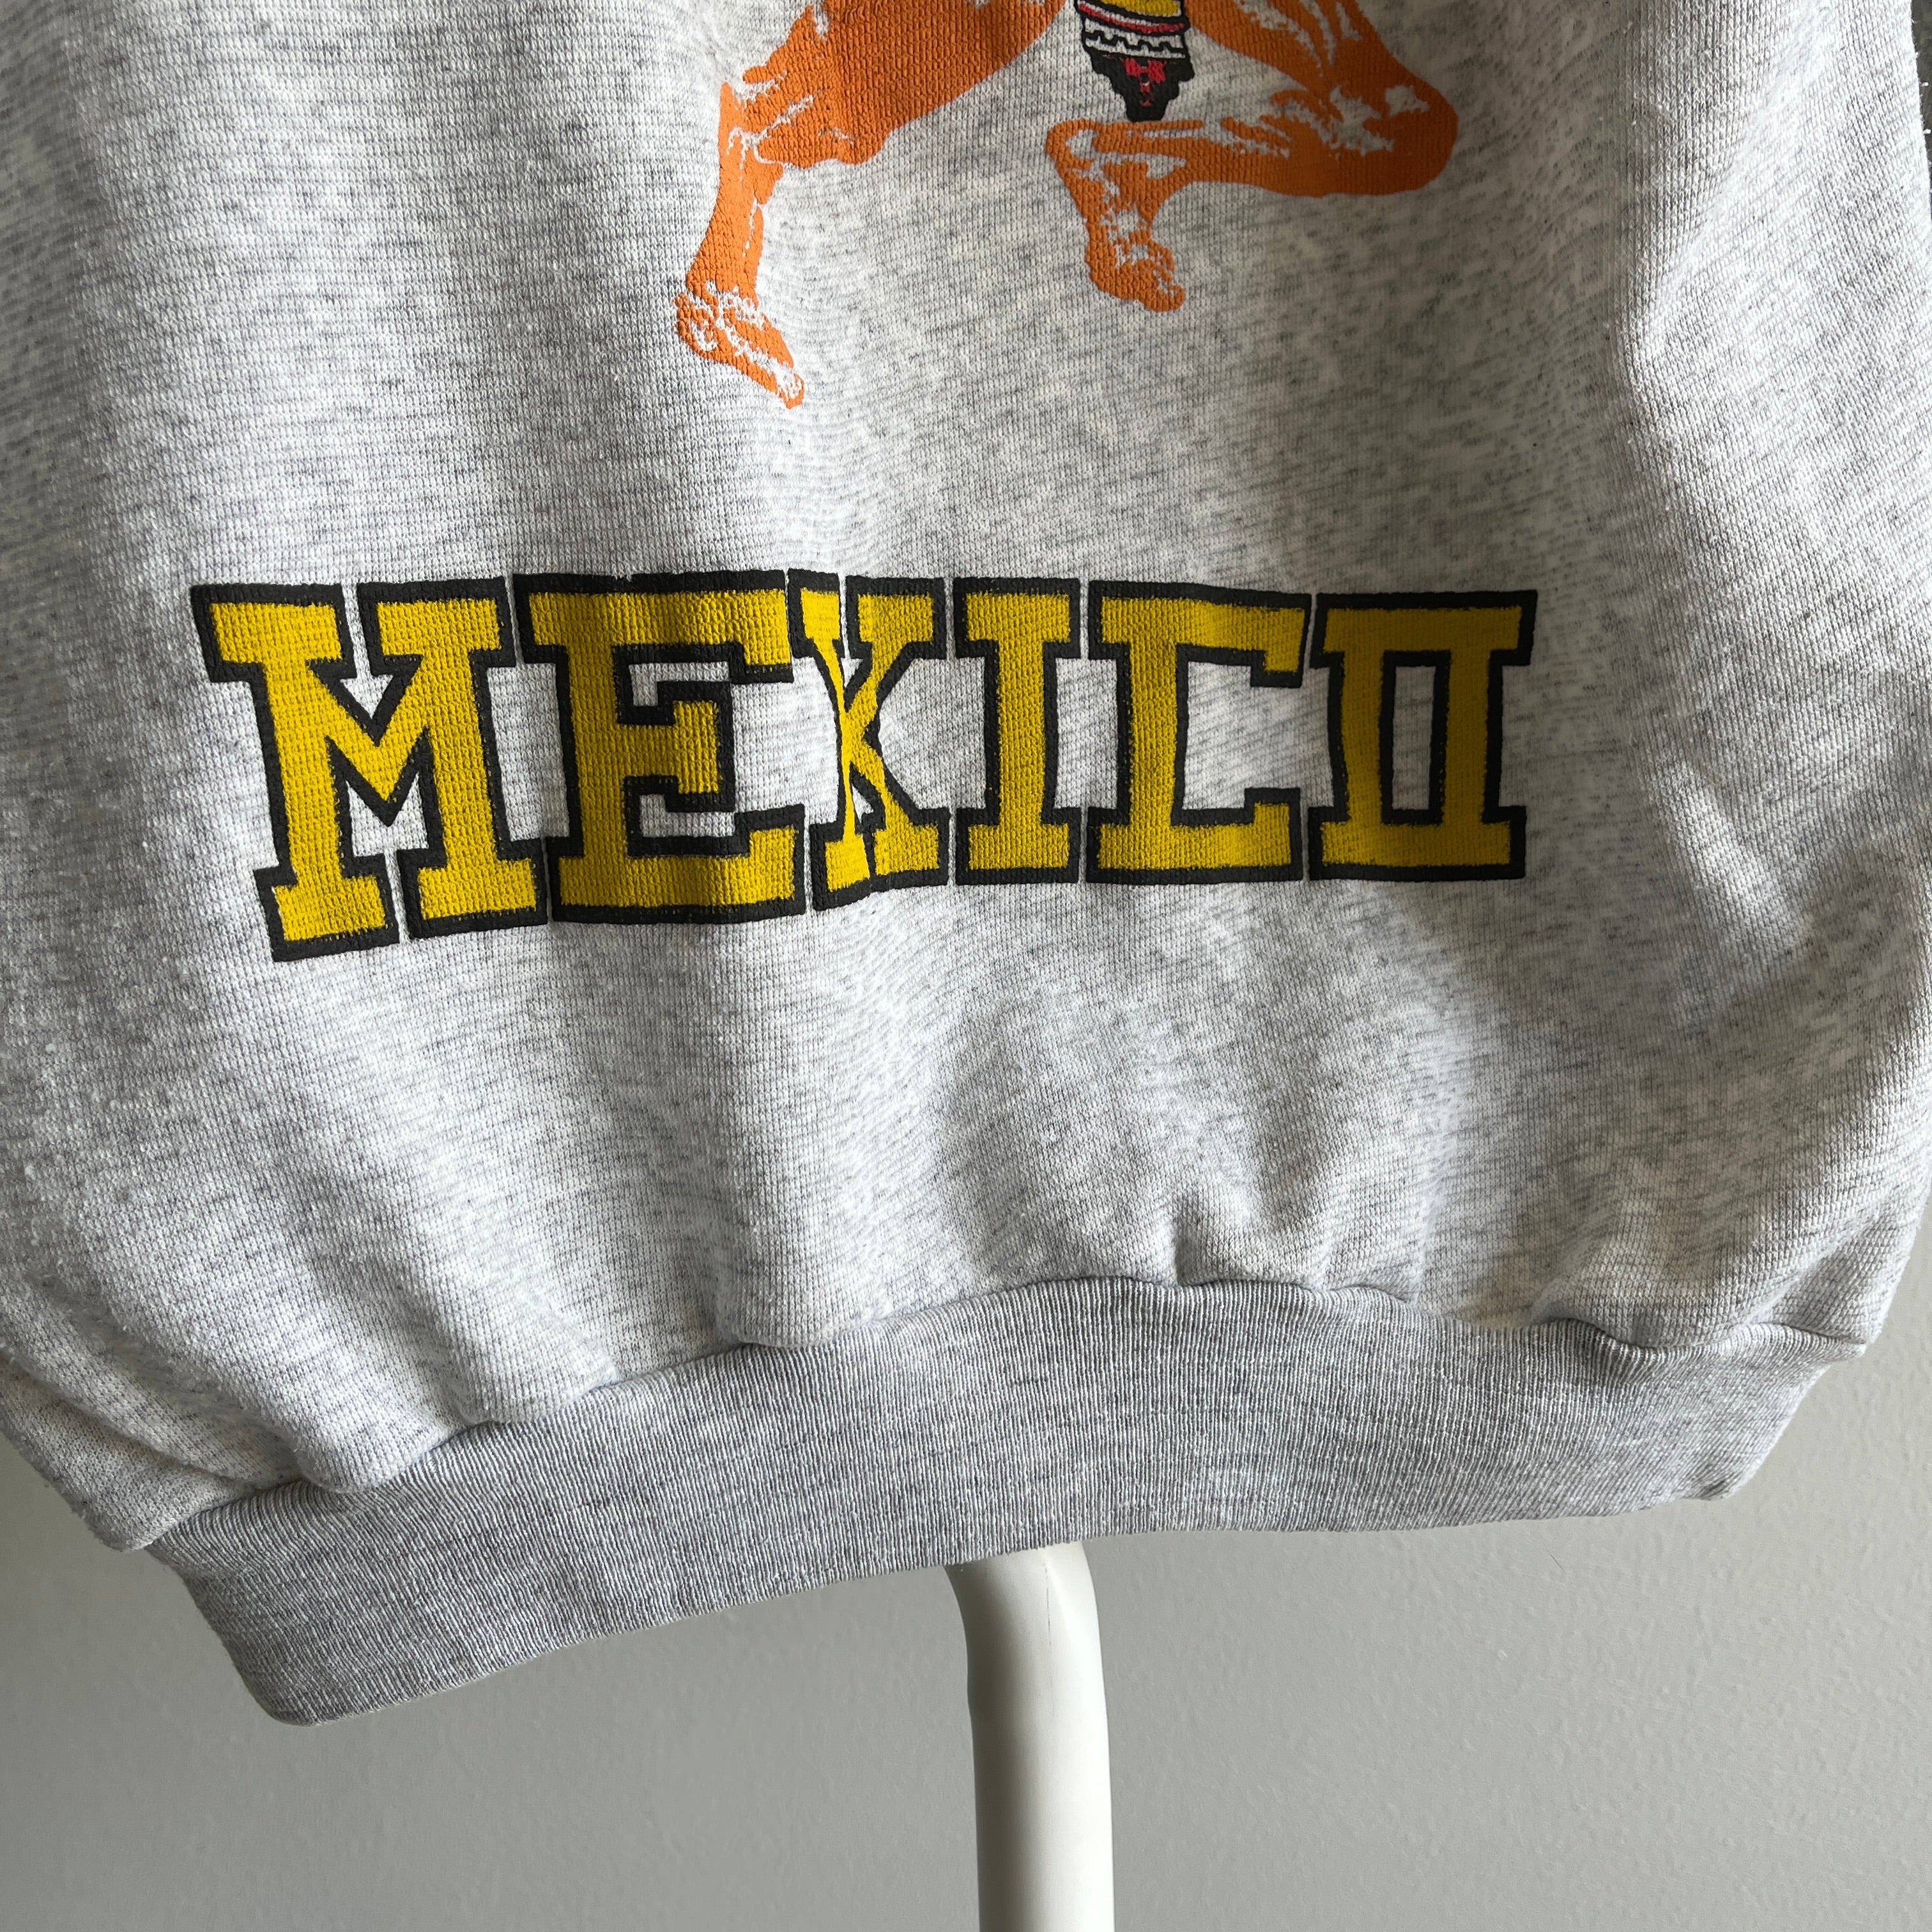 1980/90s Tijuana, Mexico Tourist Backside Sweatshirt - Very Cool